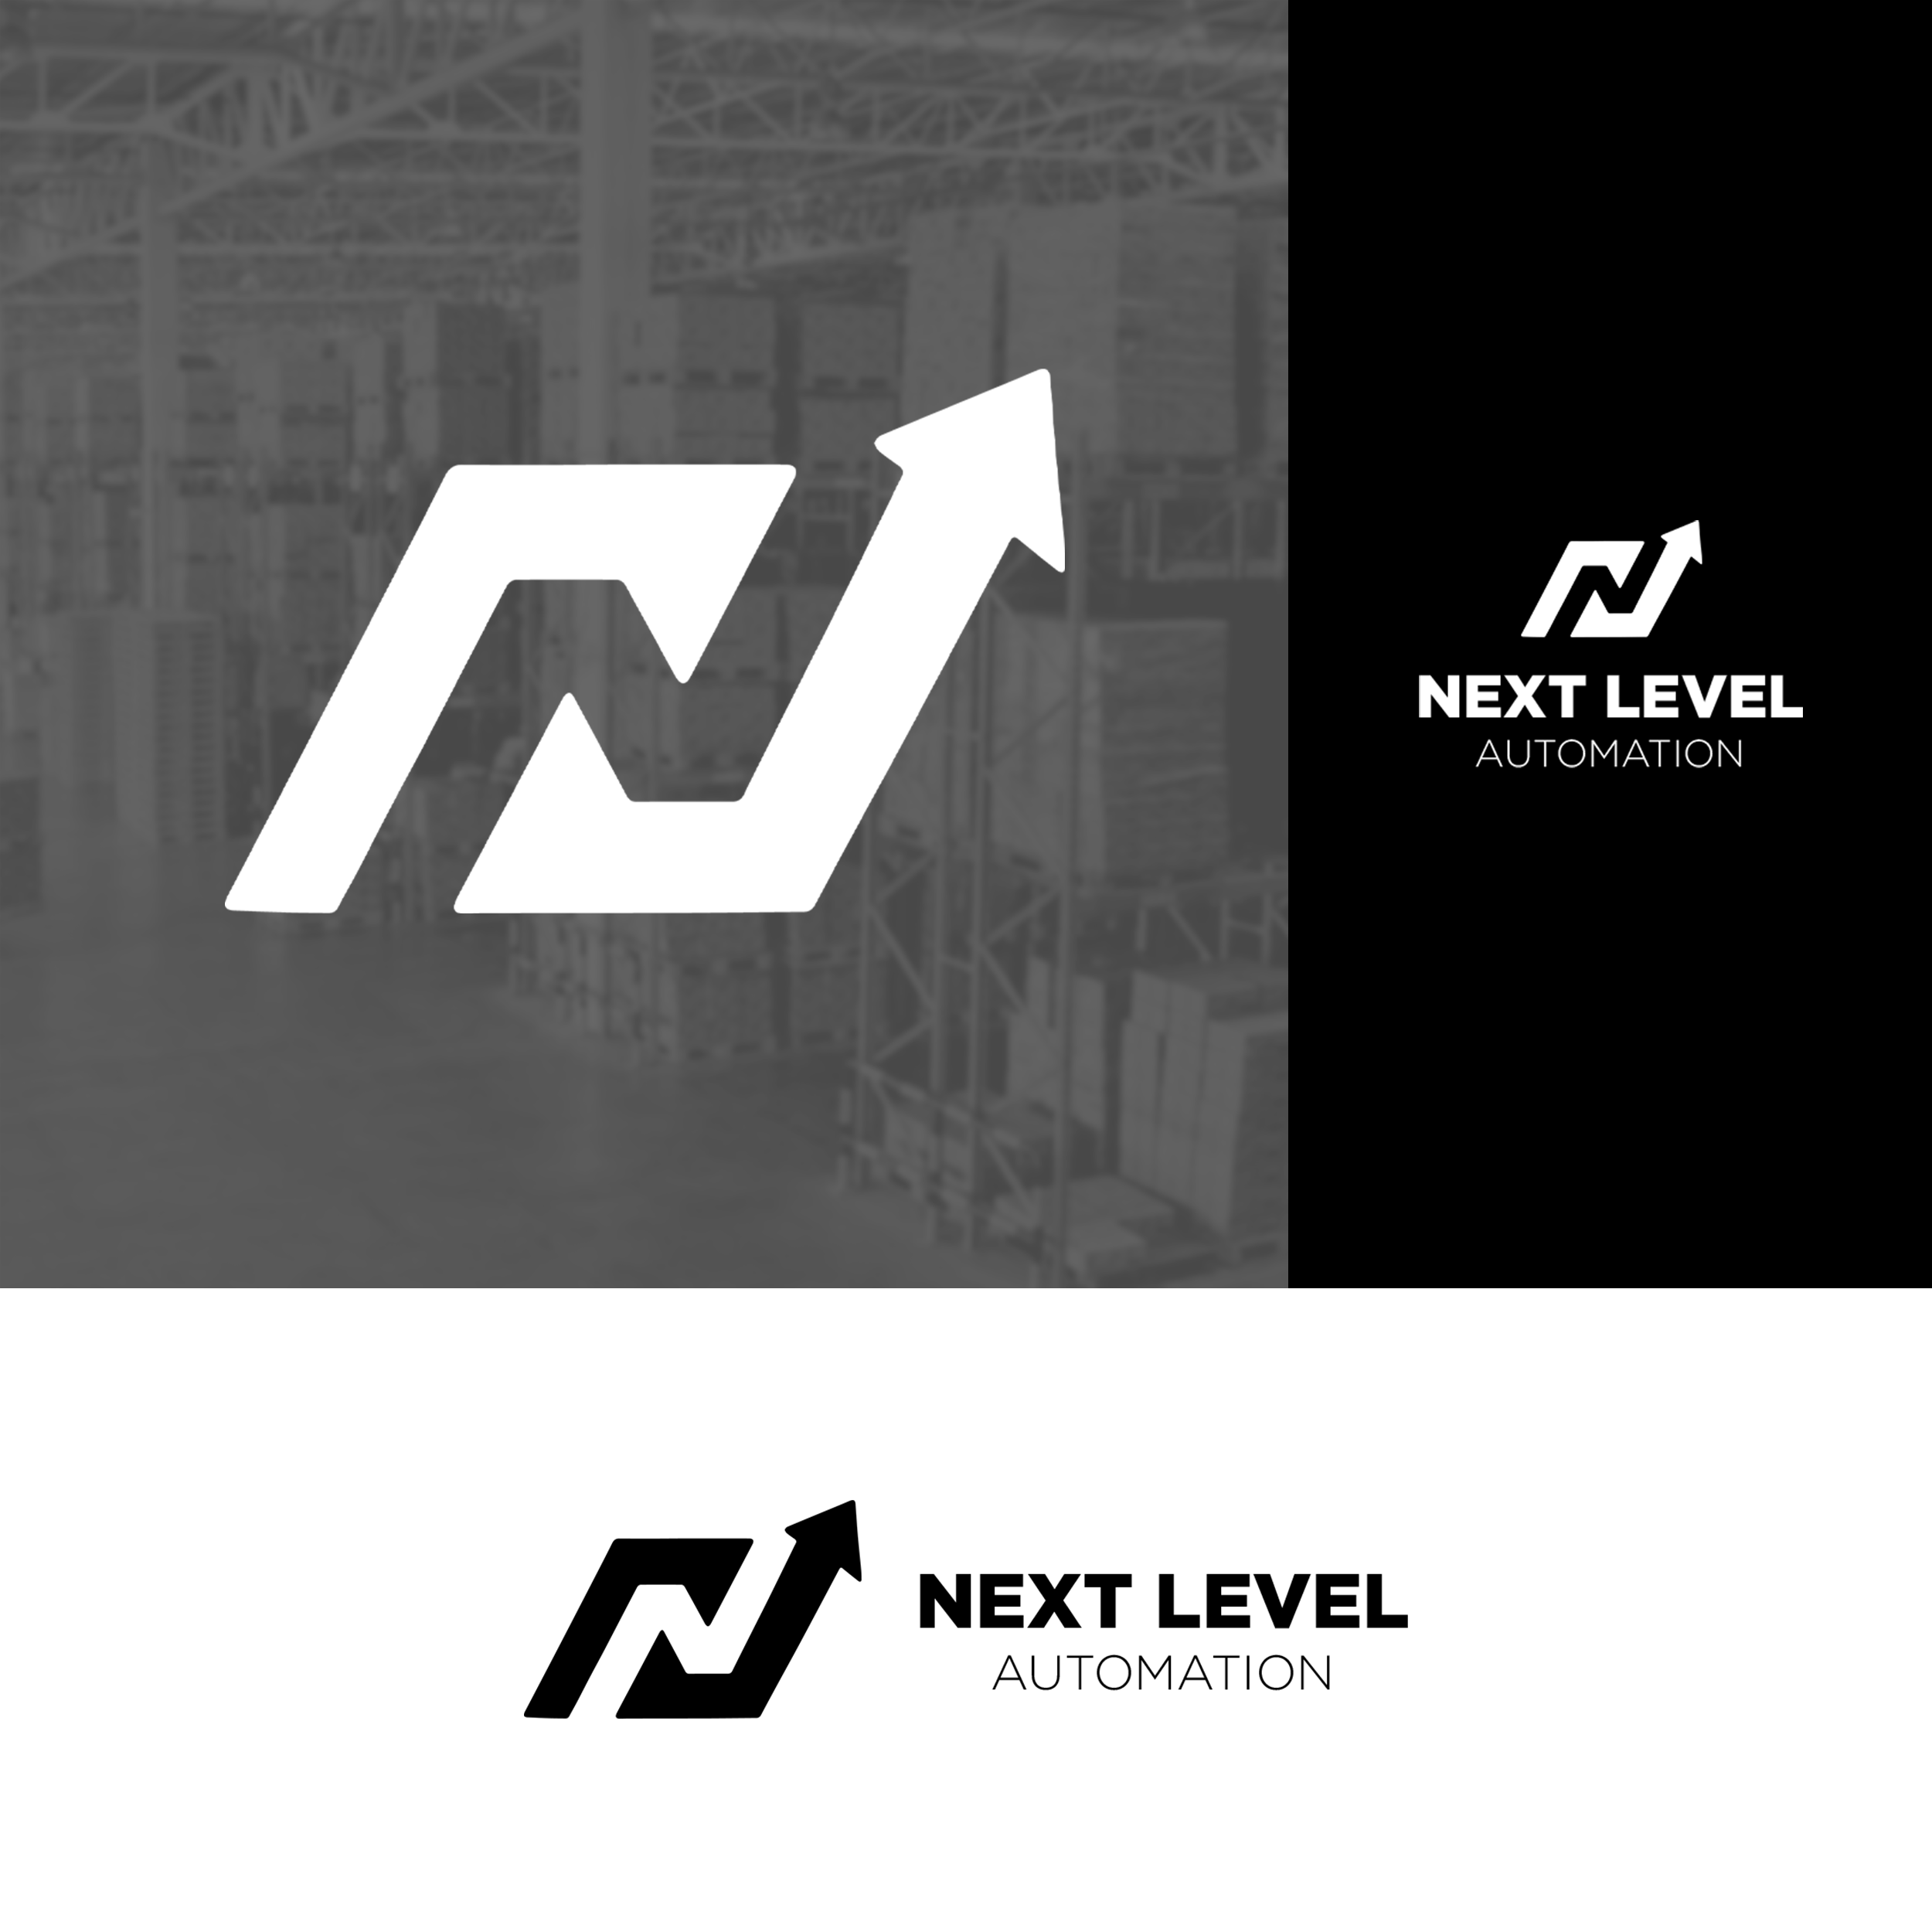 Next Level Automation Logo Identity by Wise Media